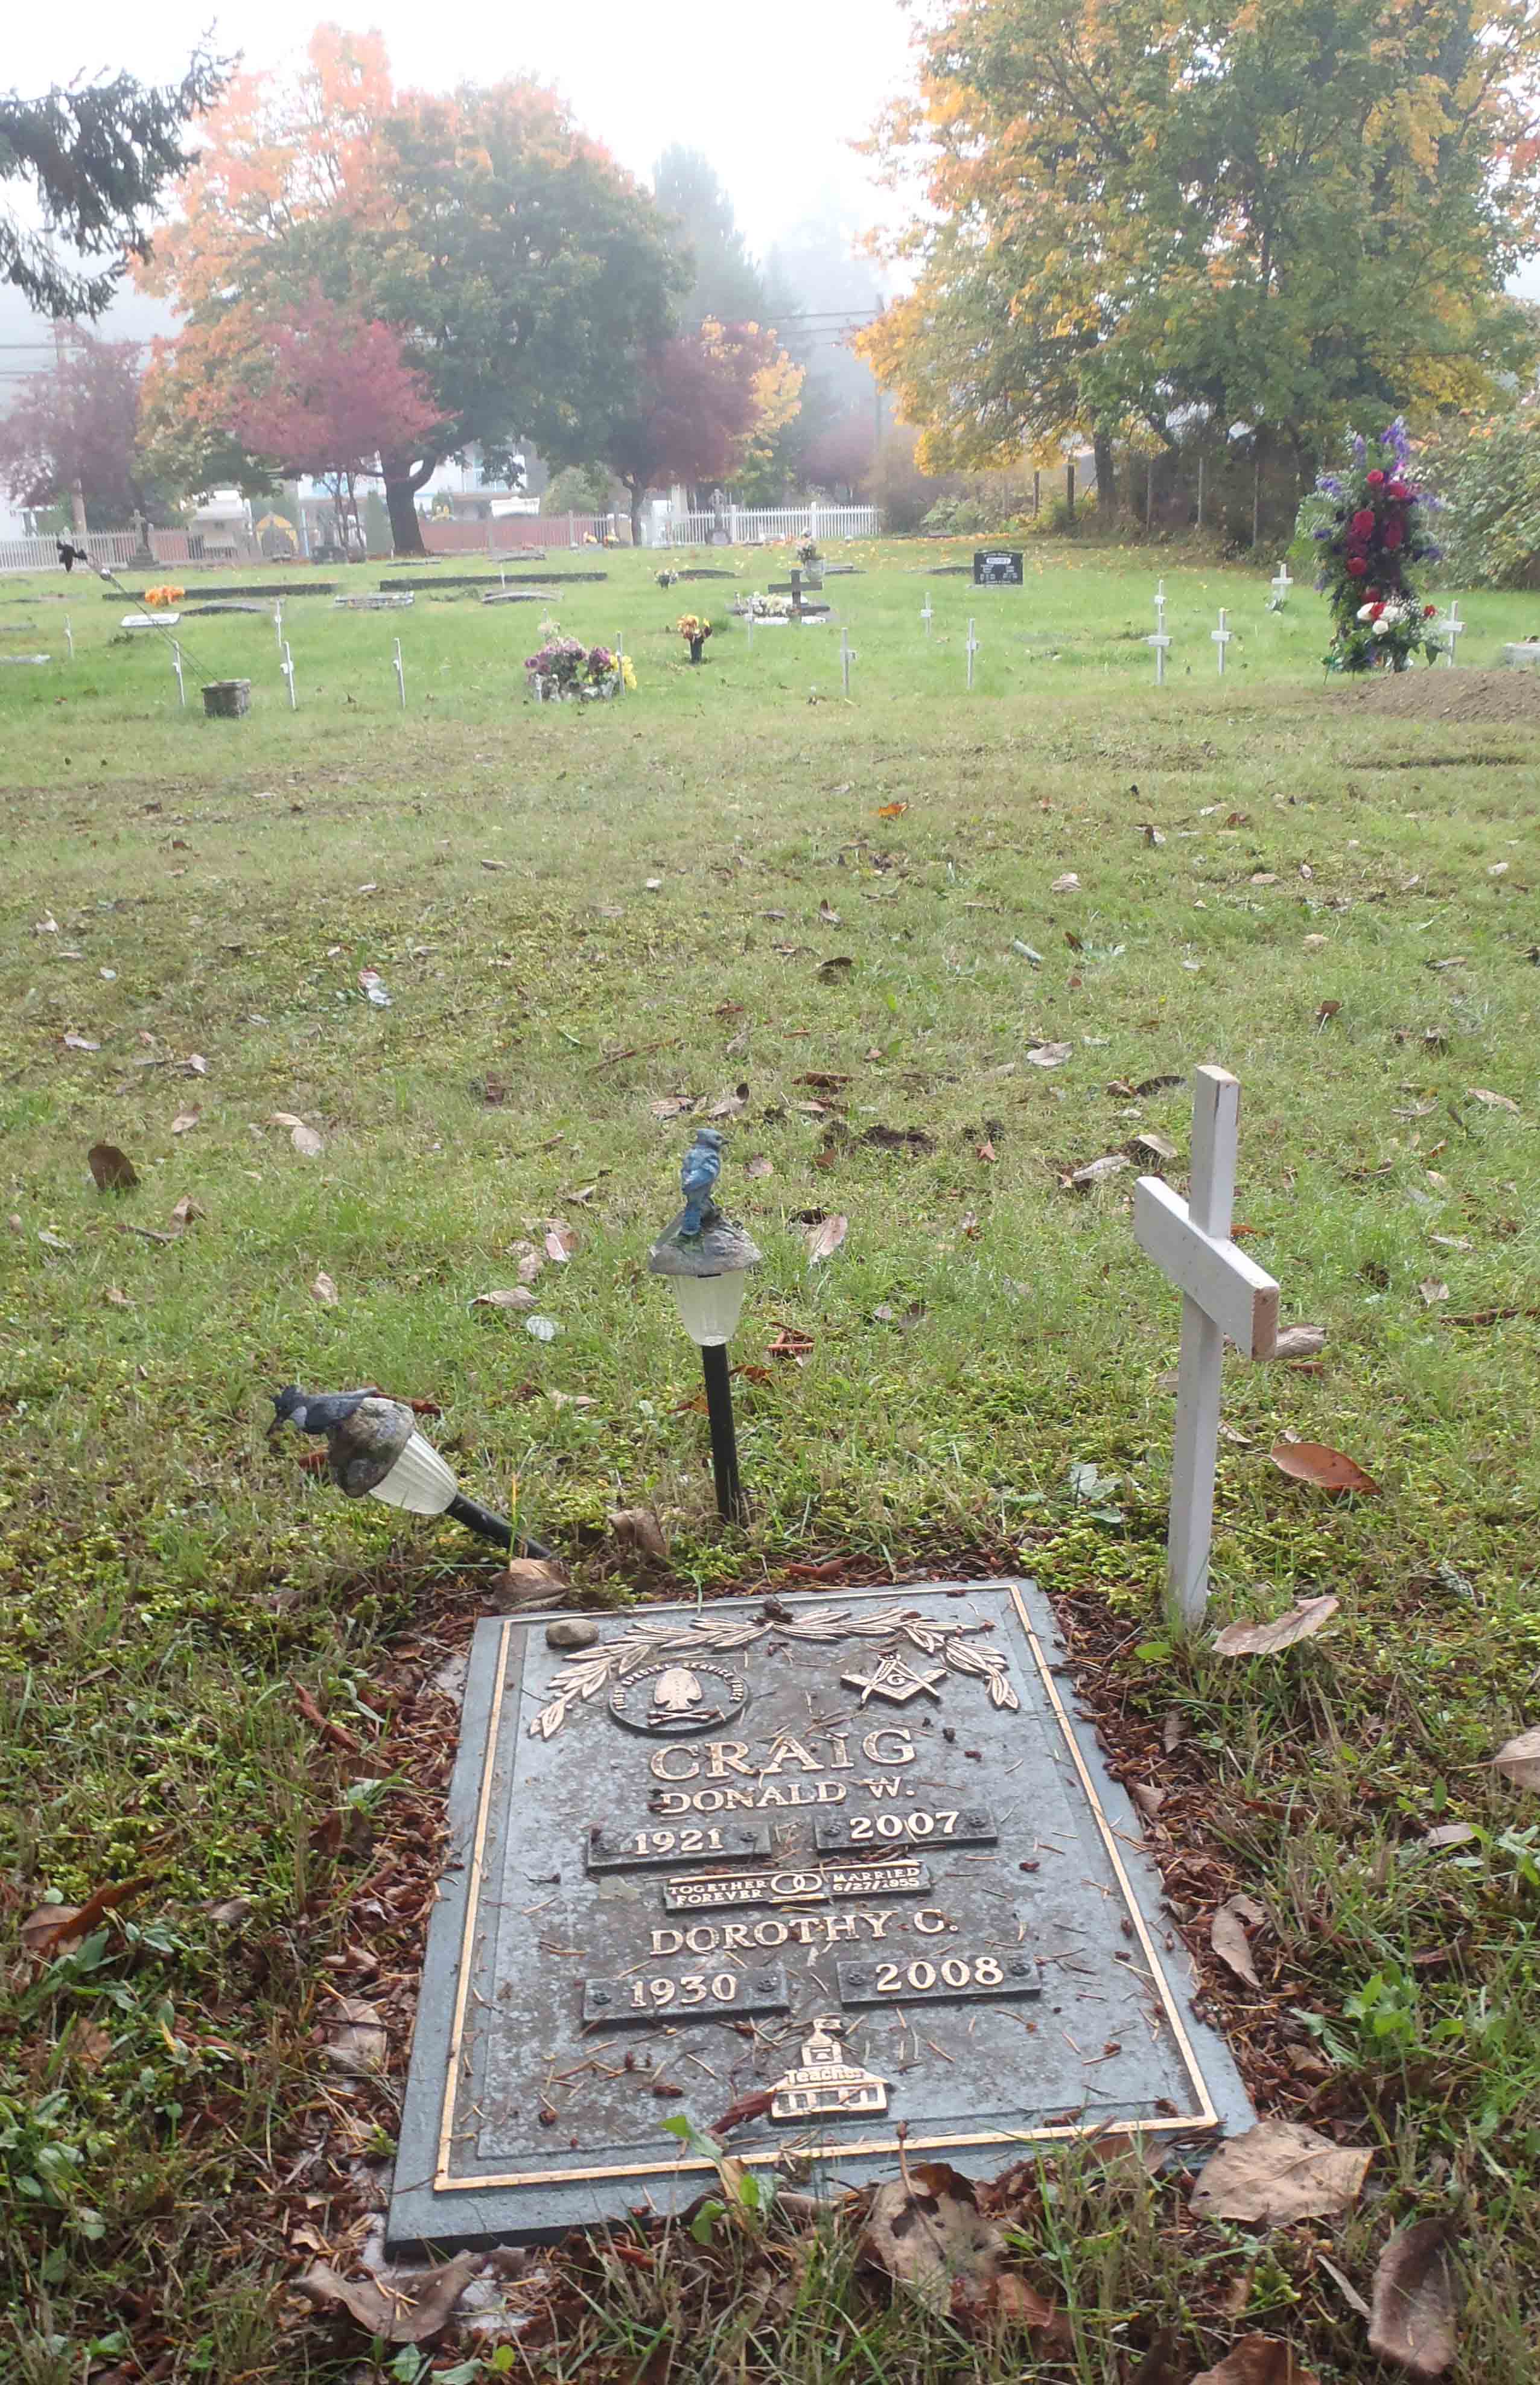 Donald Craig grave site